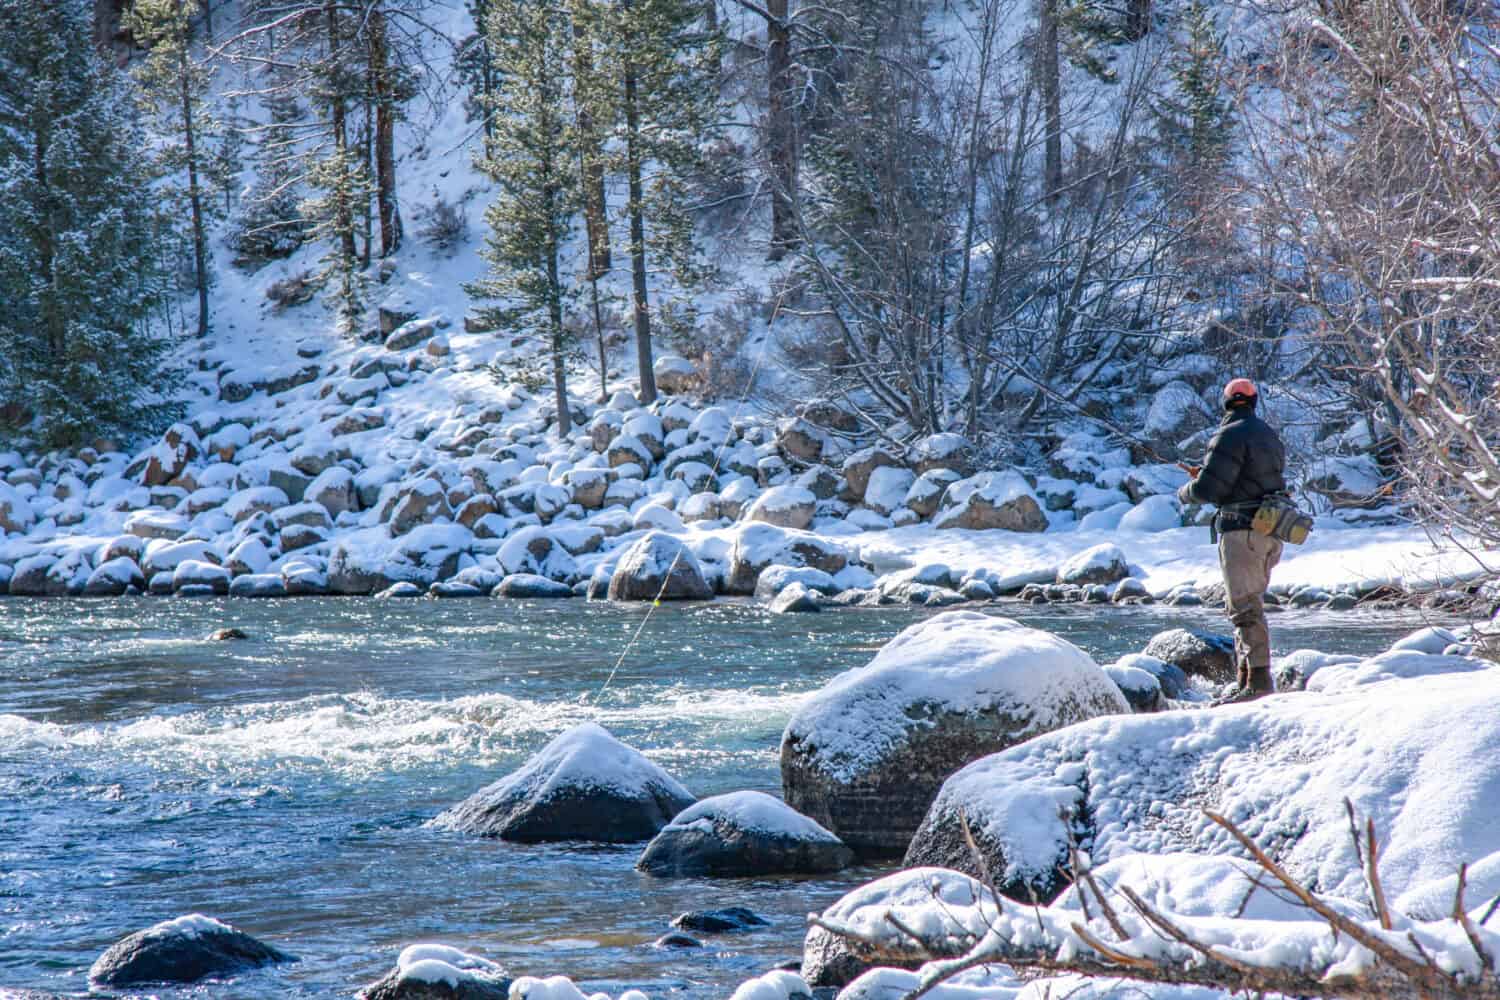 Winter fly fishing on the Salmon River, Idaho near Sun Valley